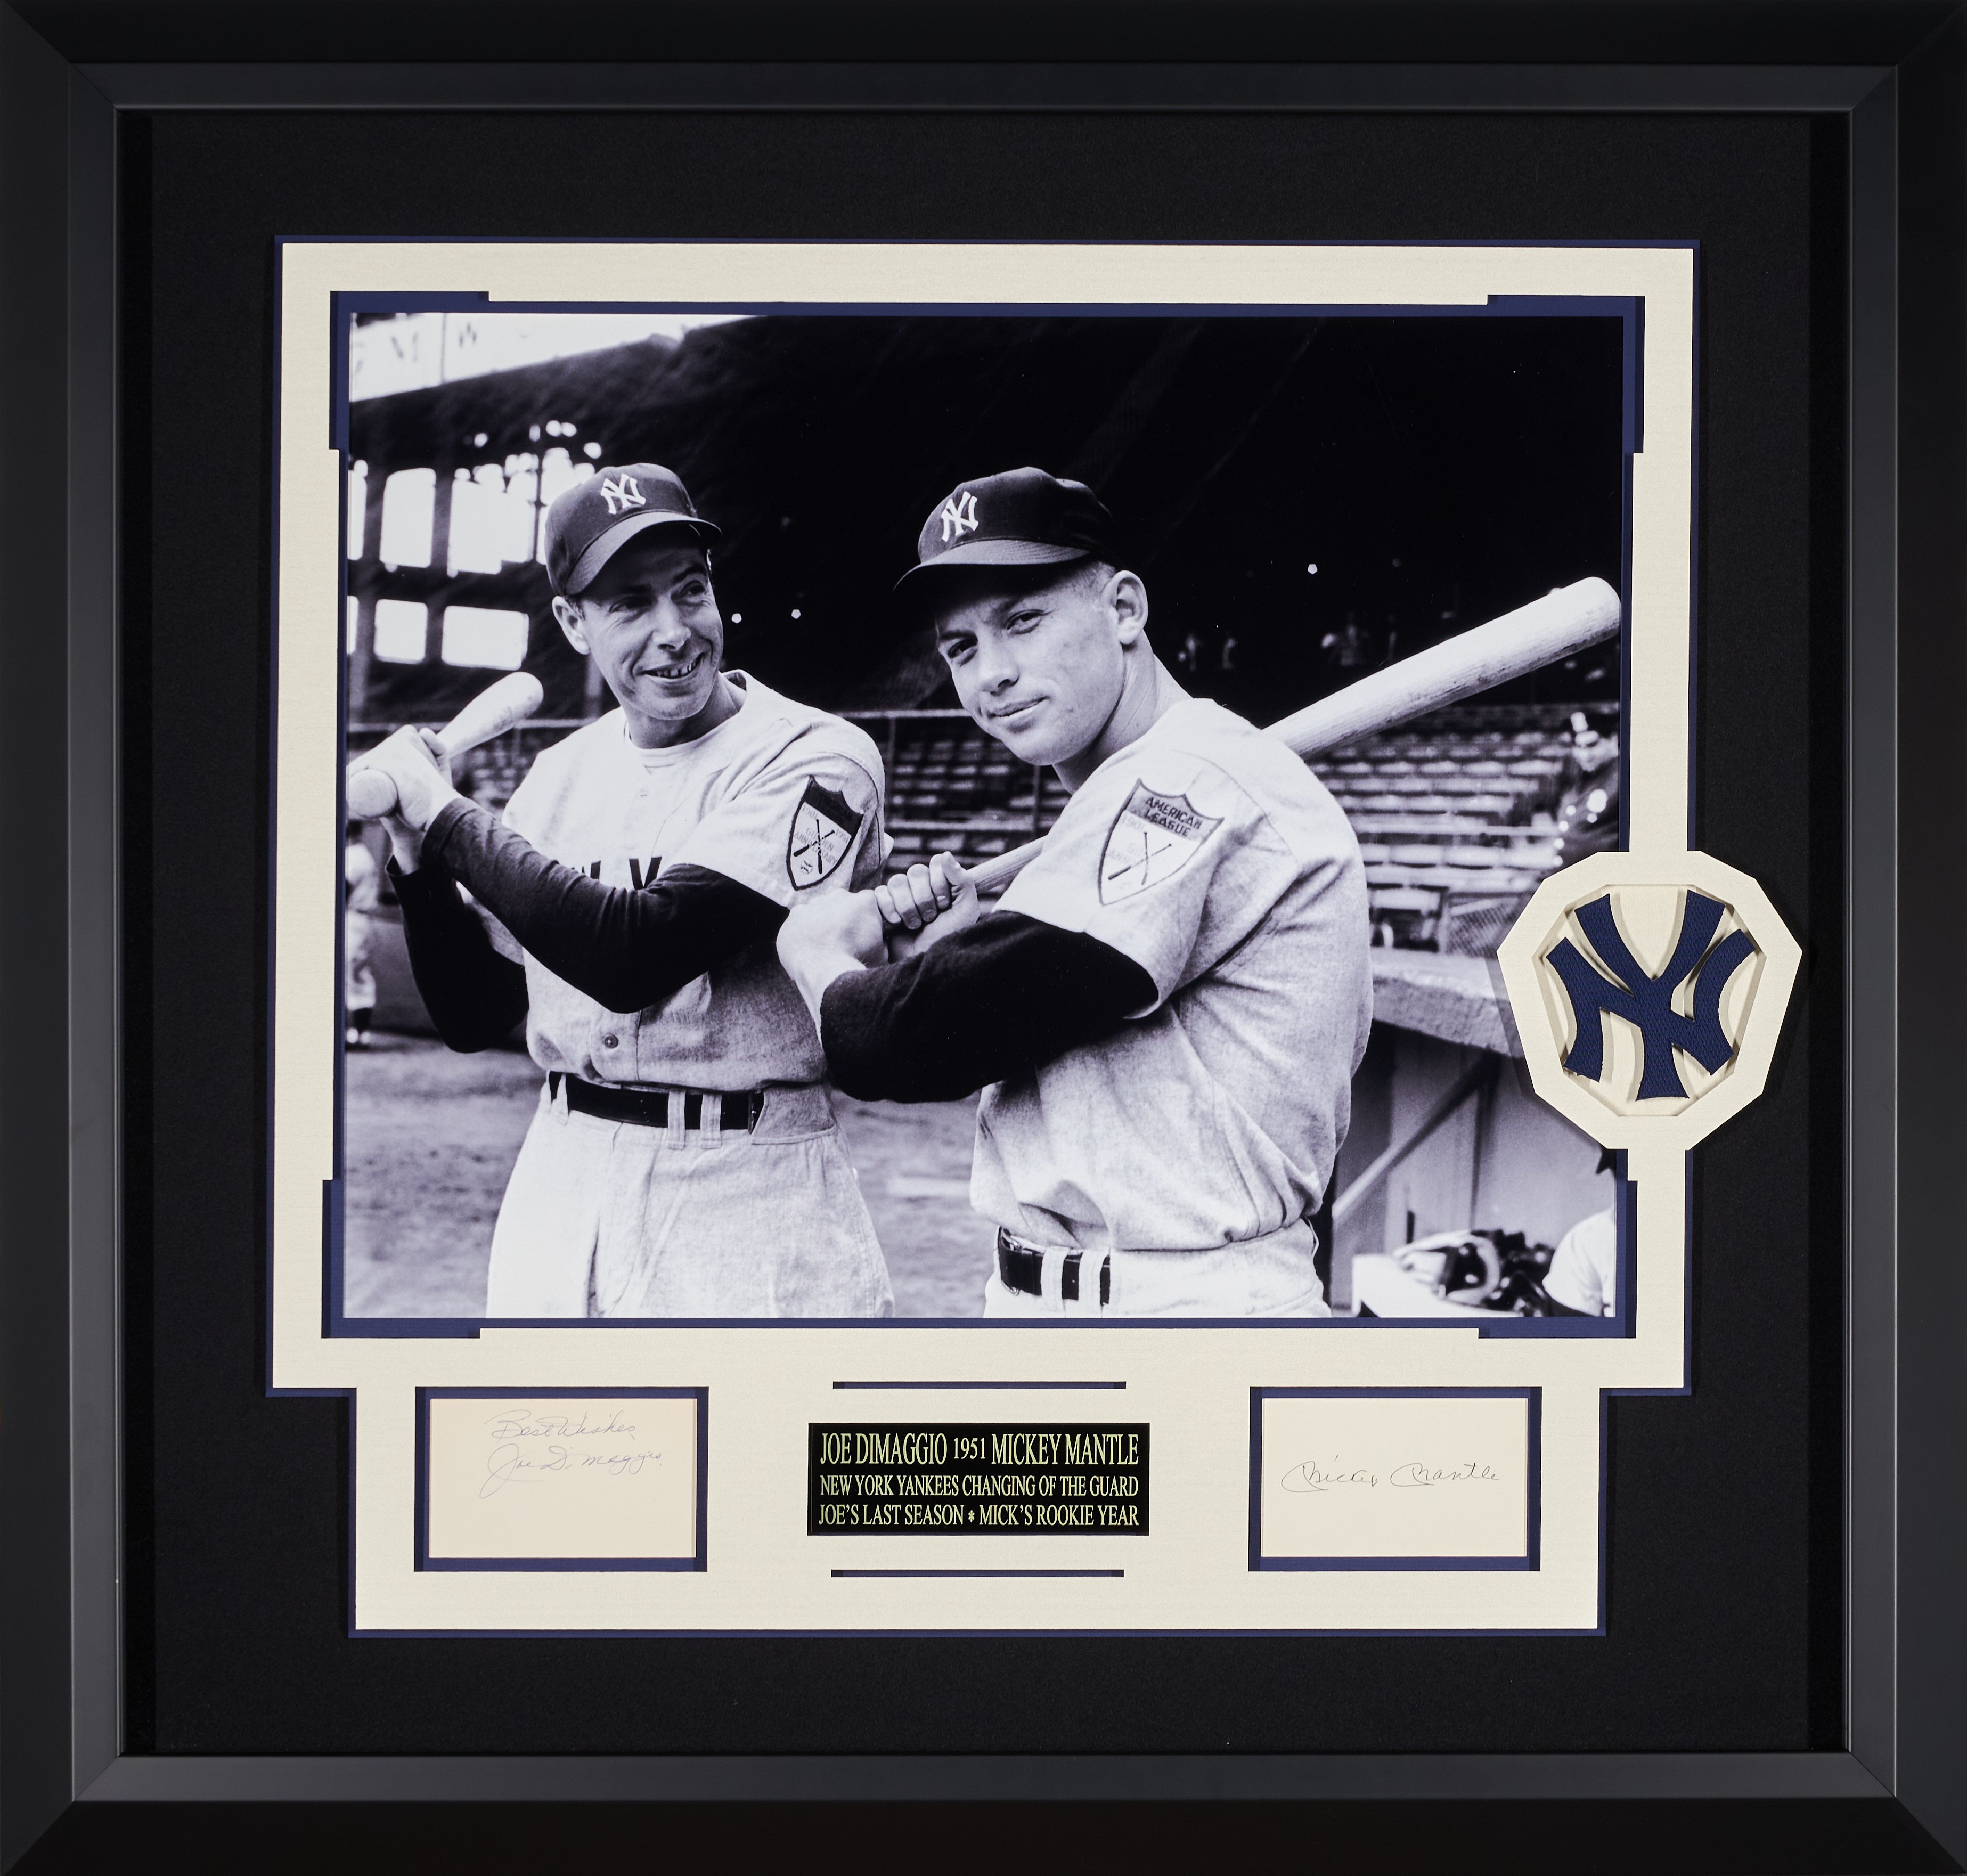 Joe DiMaggio Baseball Cards, Rookie Cards, Memorabilia, More